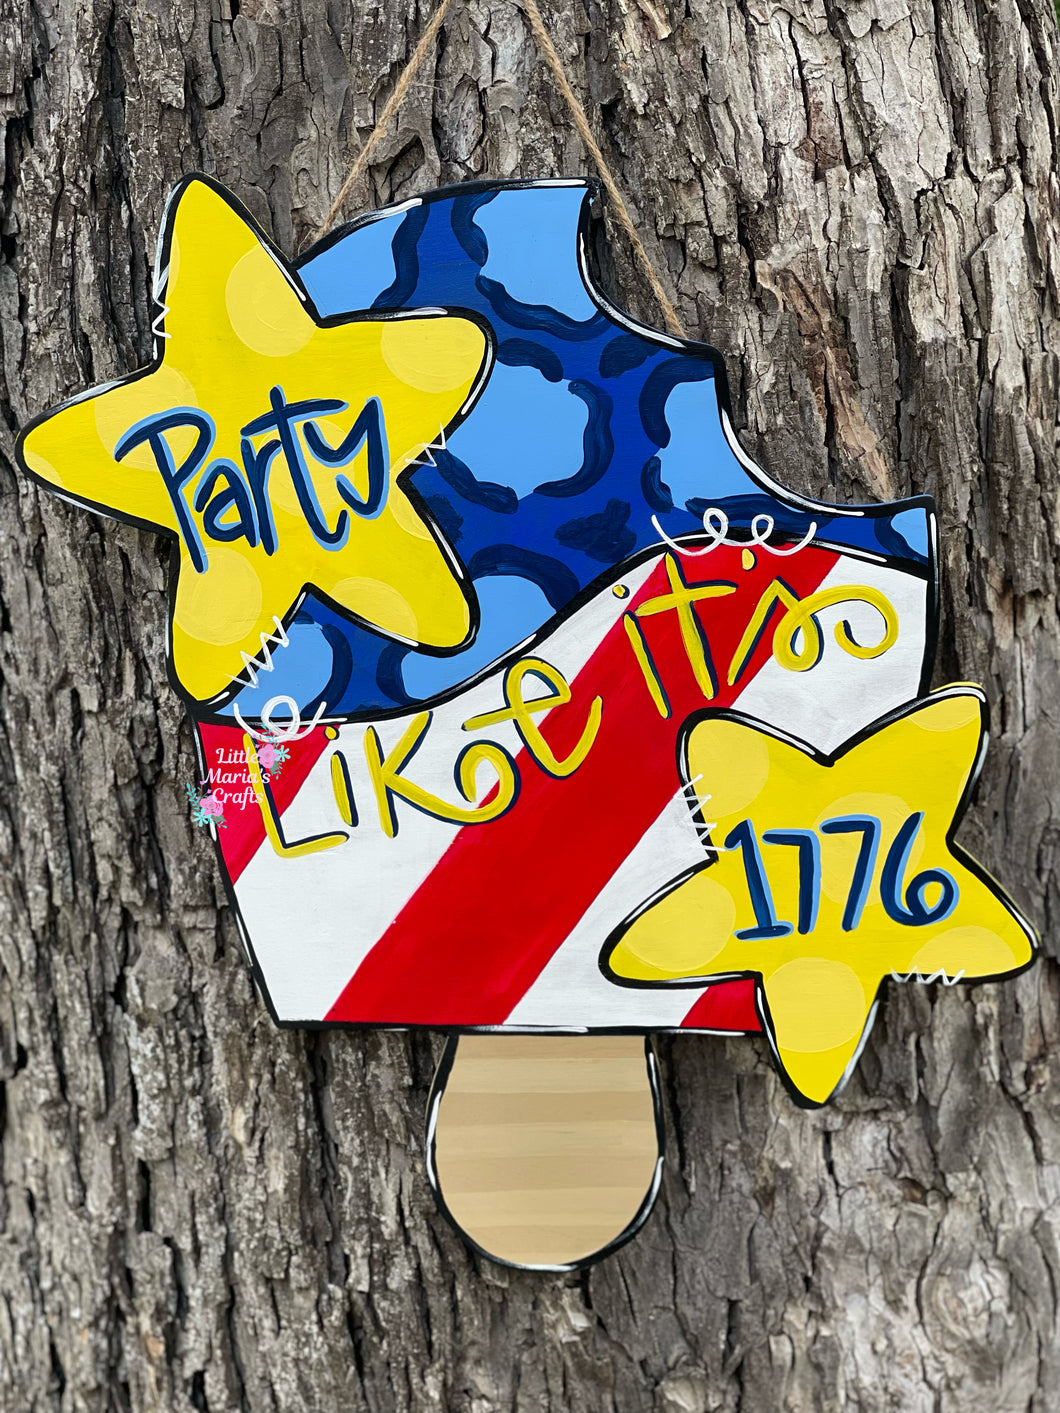 Patriotic Popsicle